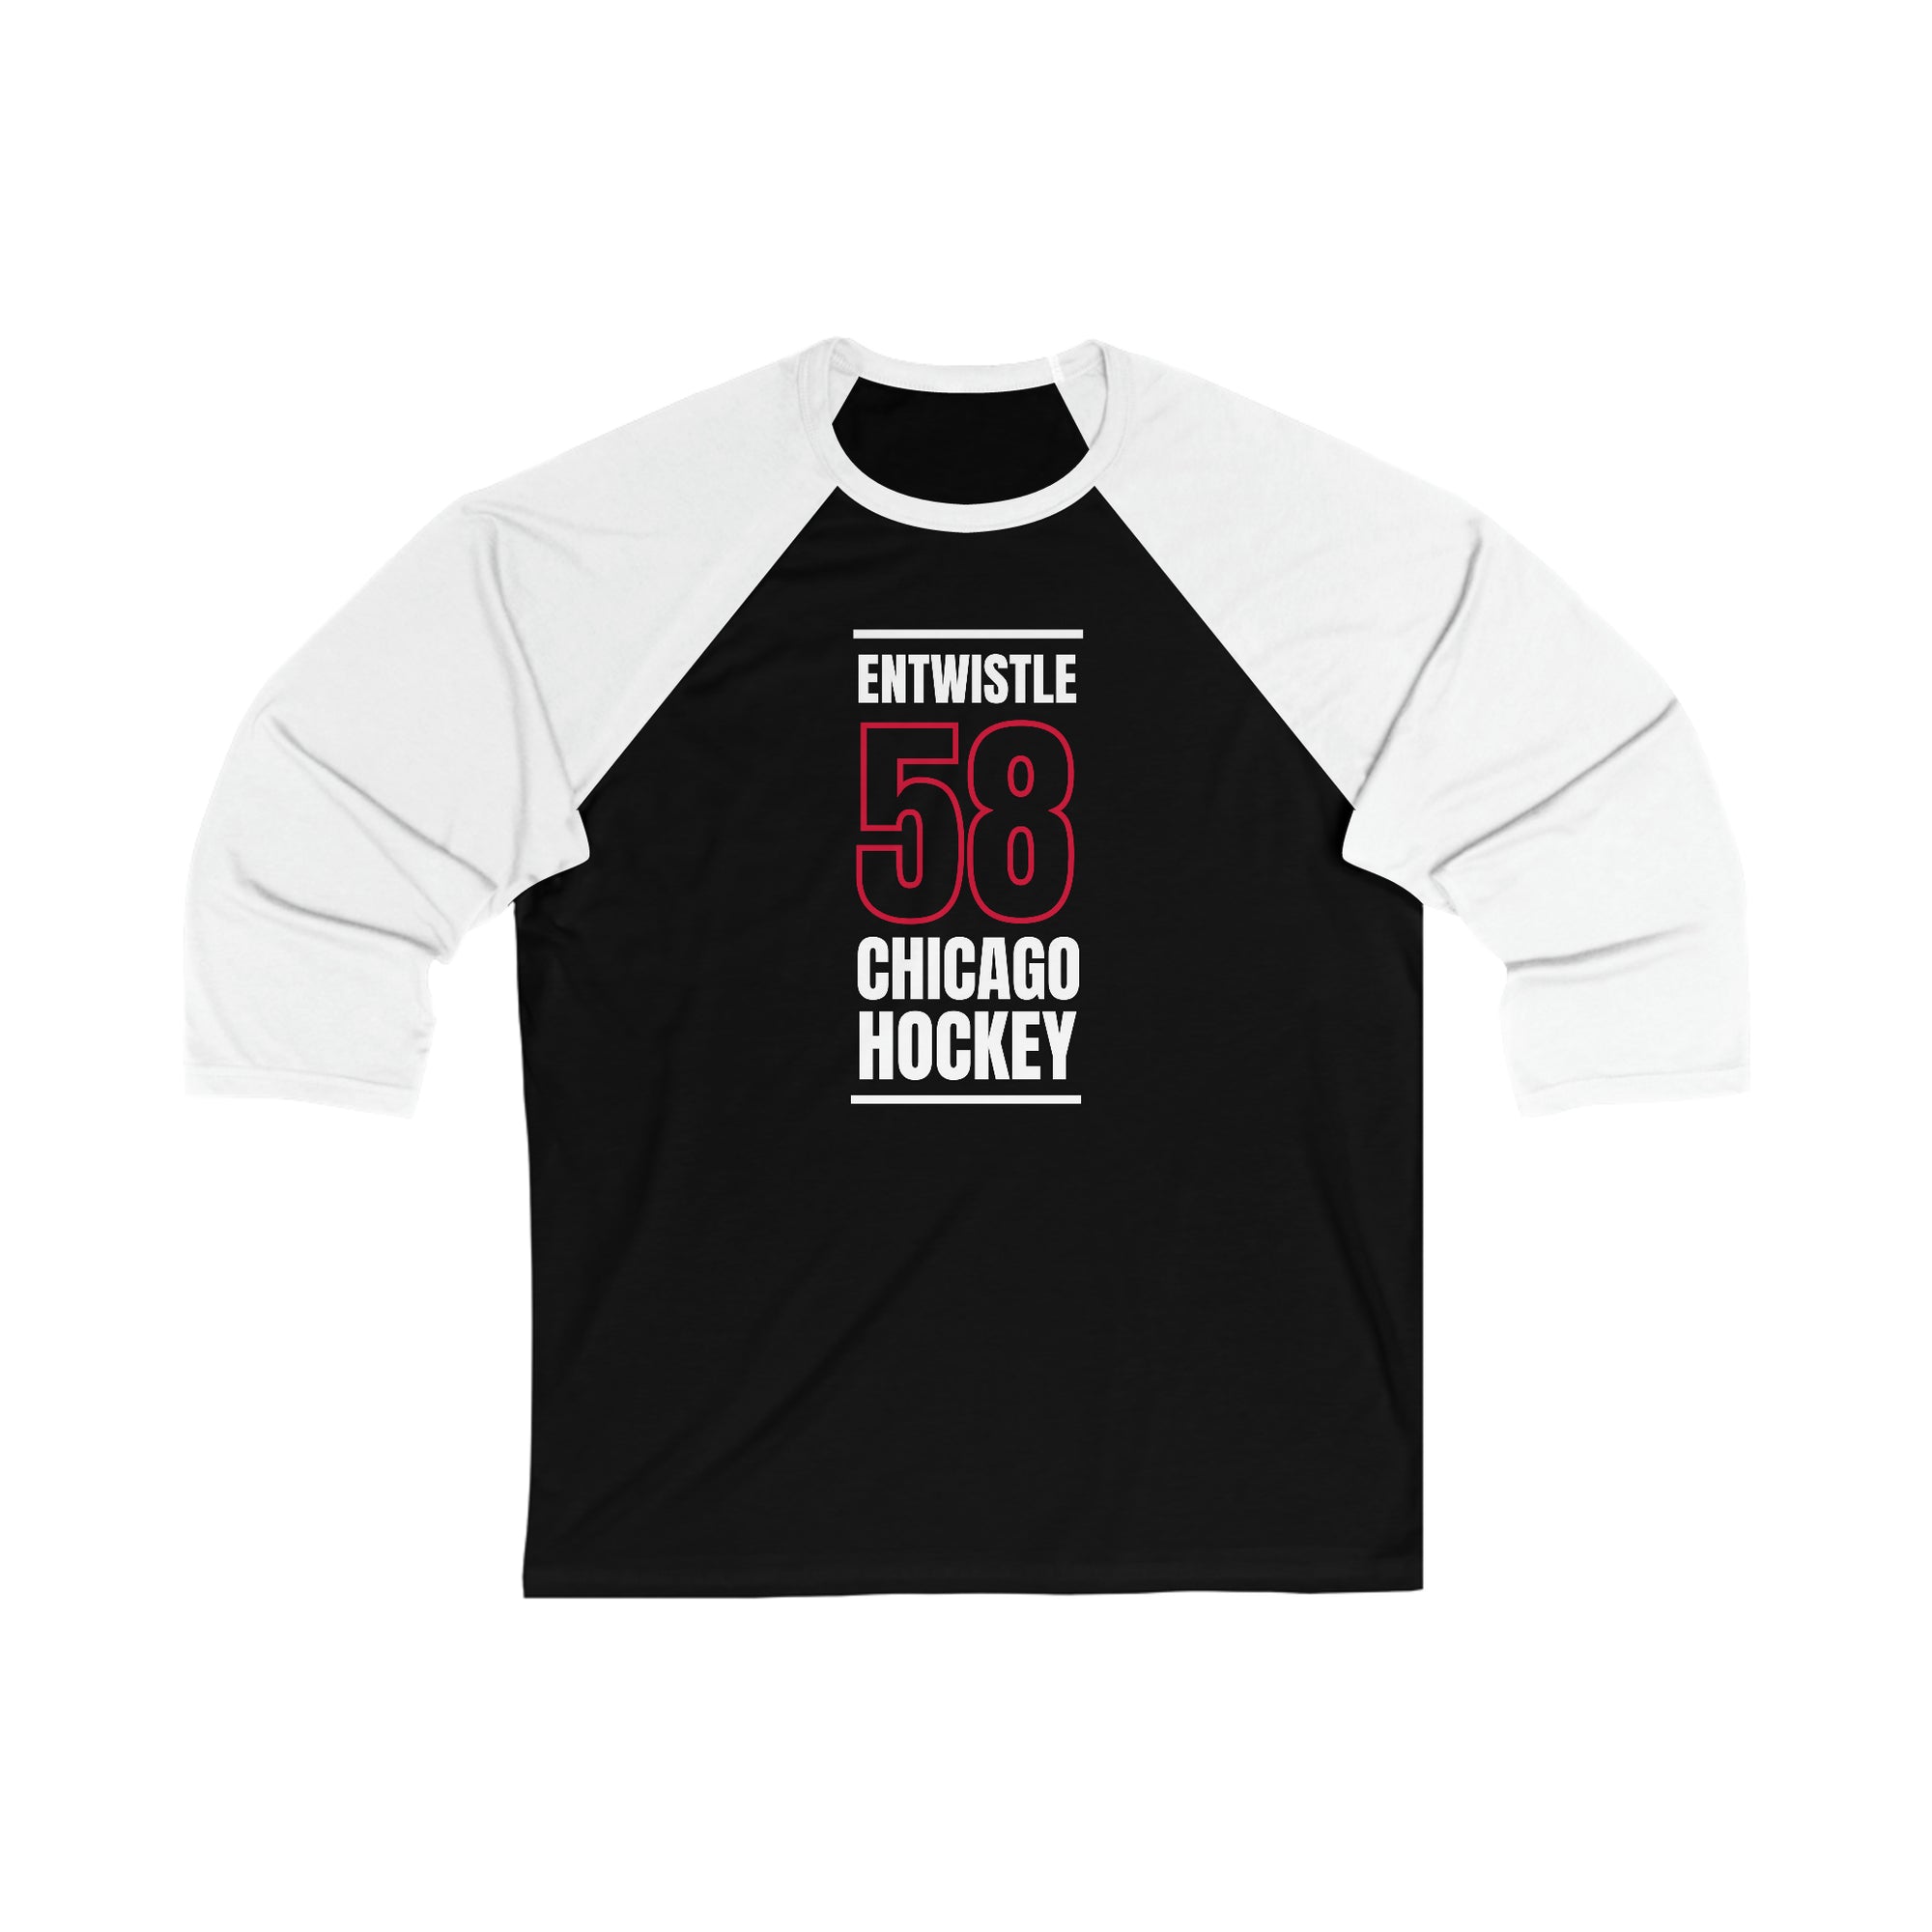 Entwistle 58 Chicago Hockey Black Vertical Design Unisex Tri-Blend 3/4 Sleeve Raglan Baseball Shirt